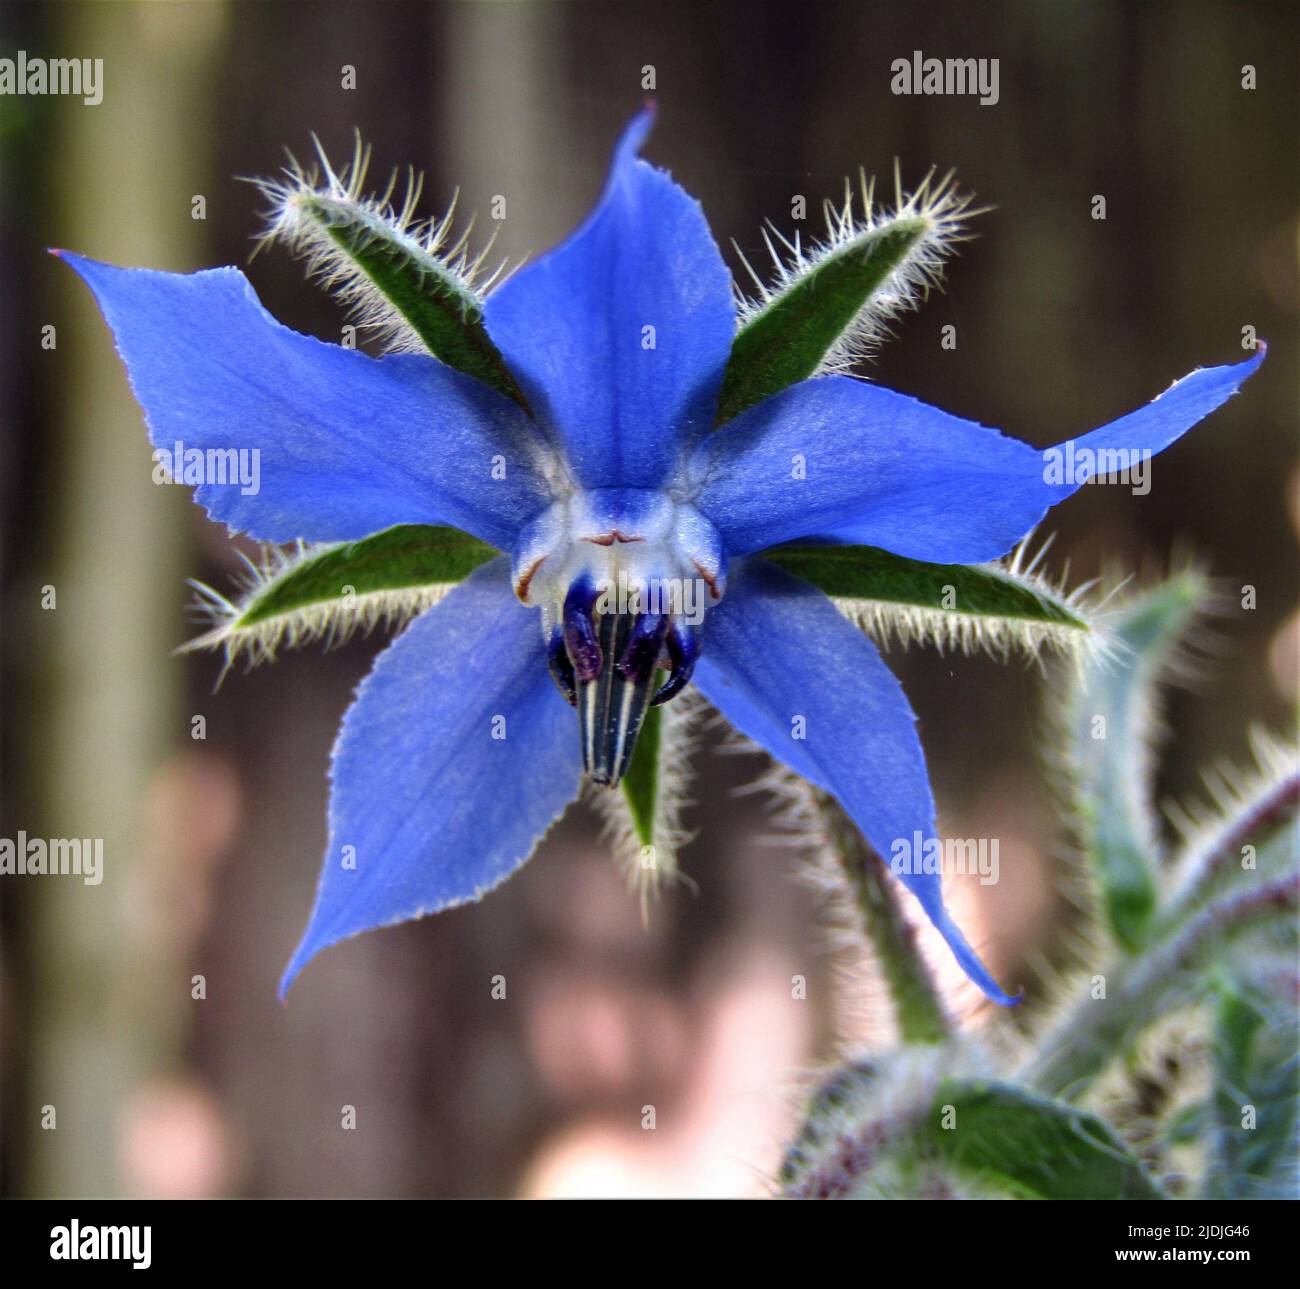 Borage or Star Flower - Edible Wildflower Stock Photo